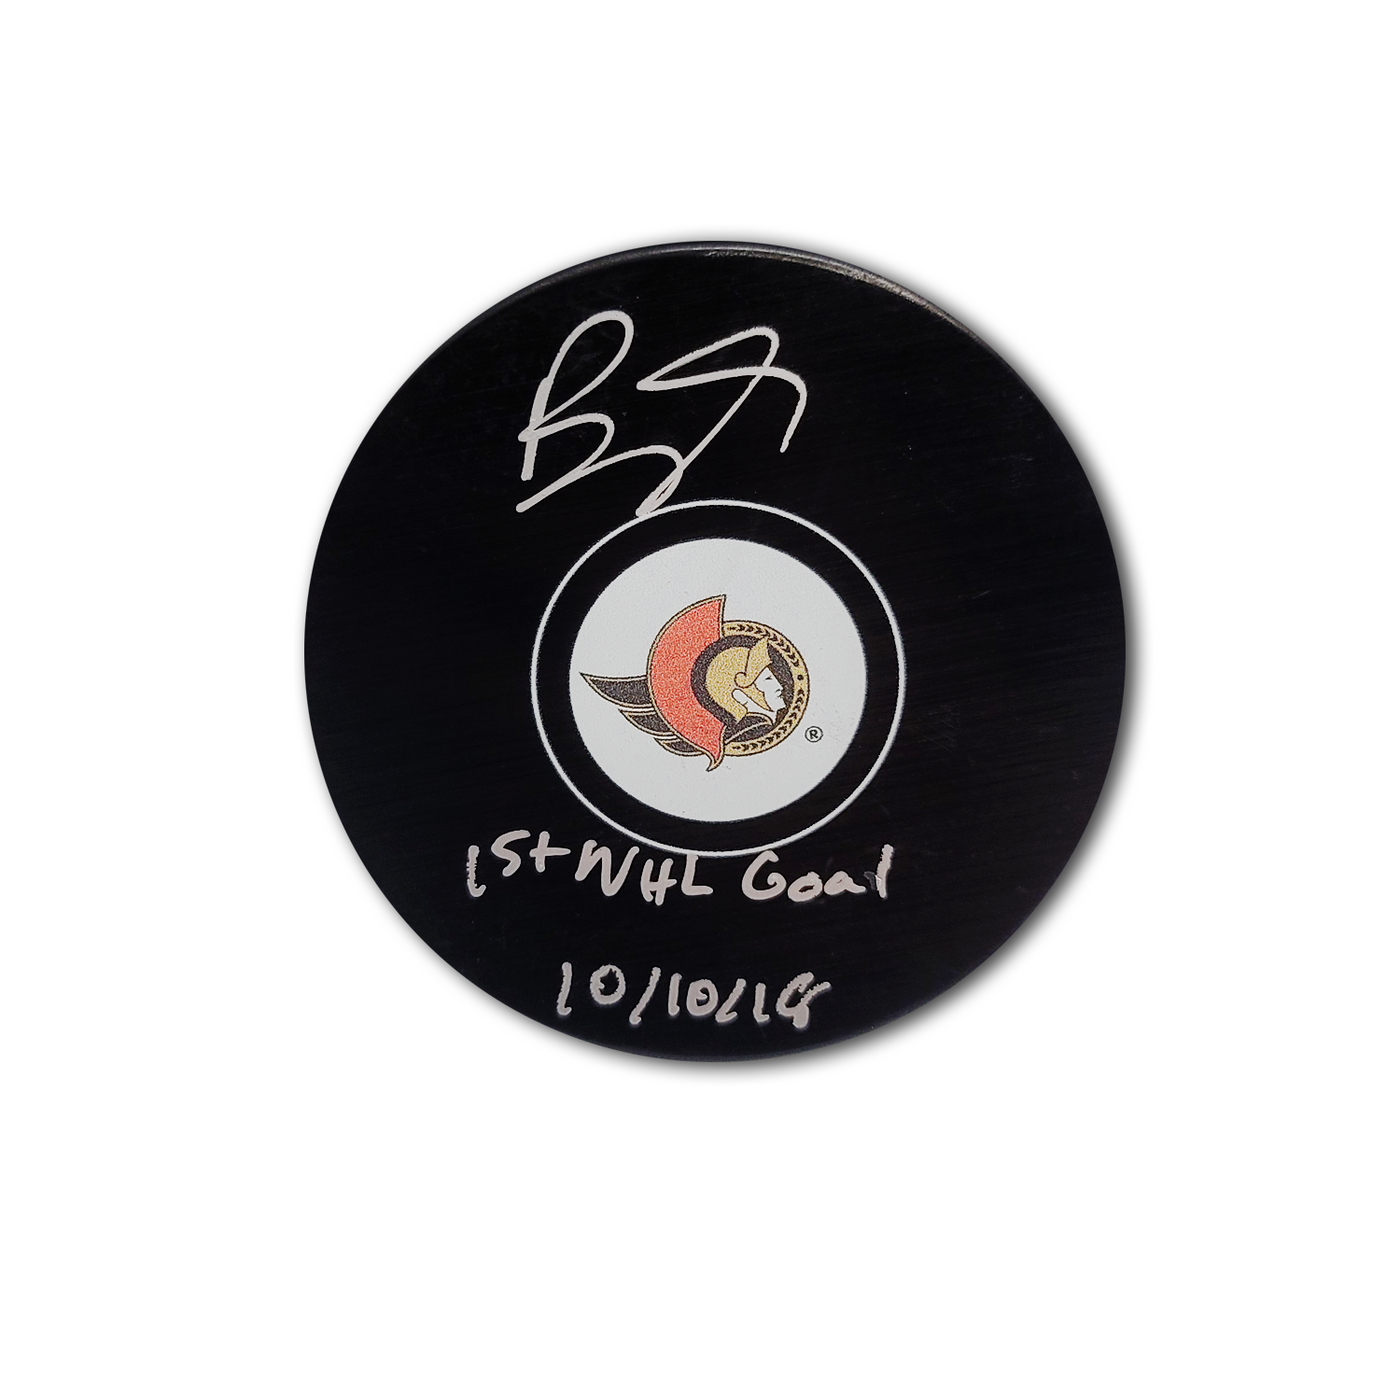 Brady Tkachuk Ottawa Senators Autographed Hockey Puck Inscribed 1st NHL Goal 10/10/18